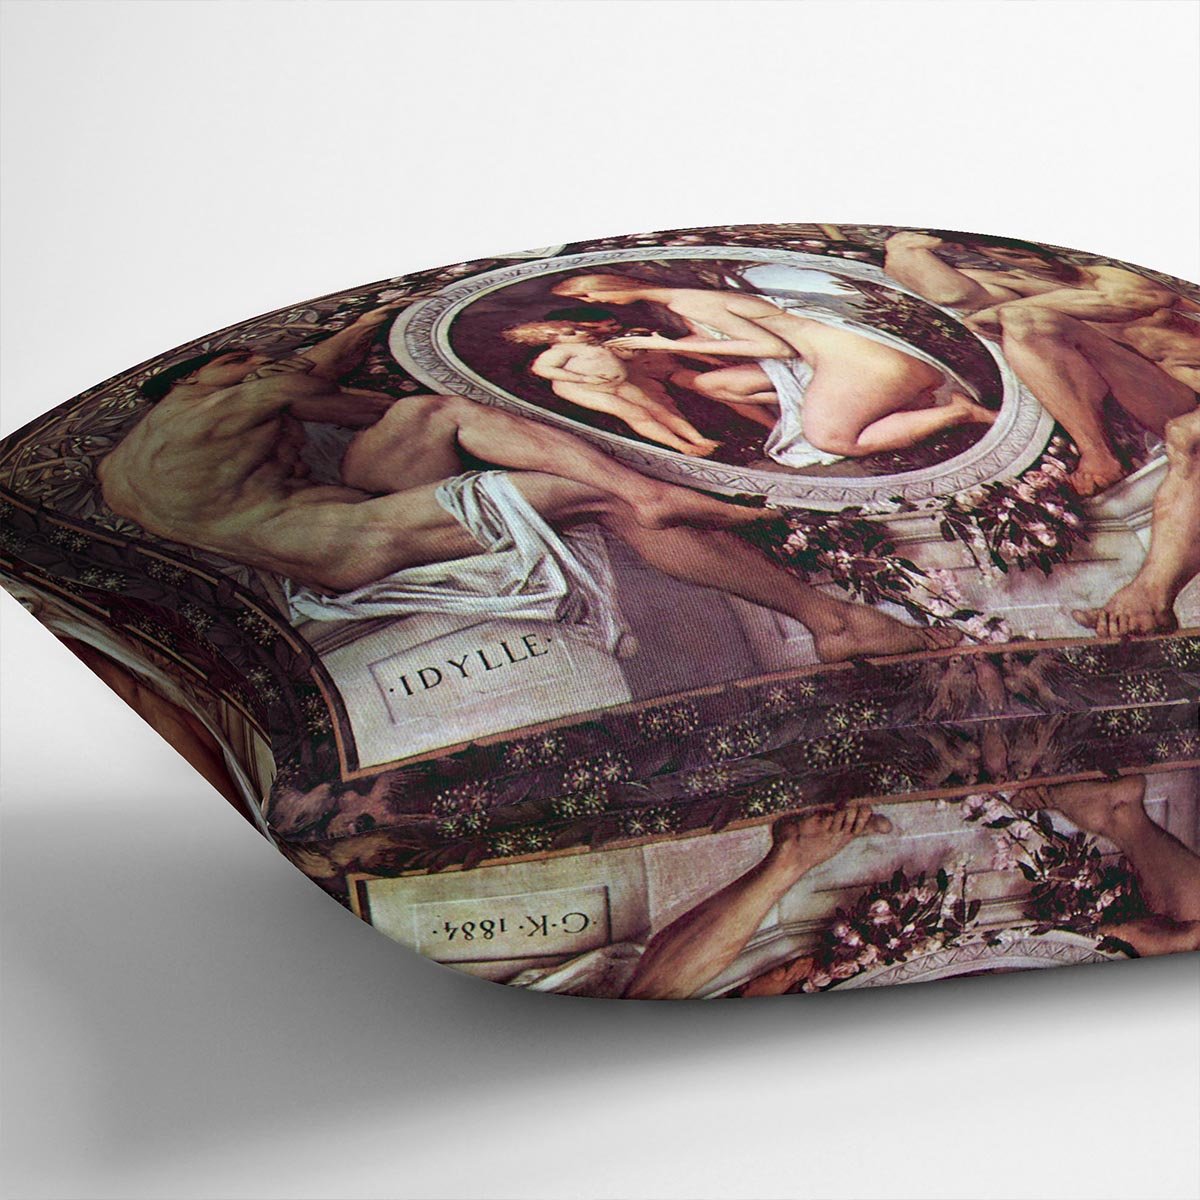 Idyll by Klimt Throw Pillow